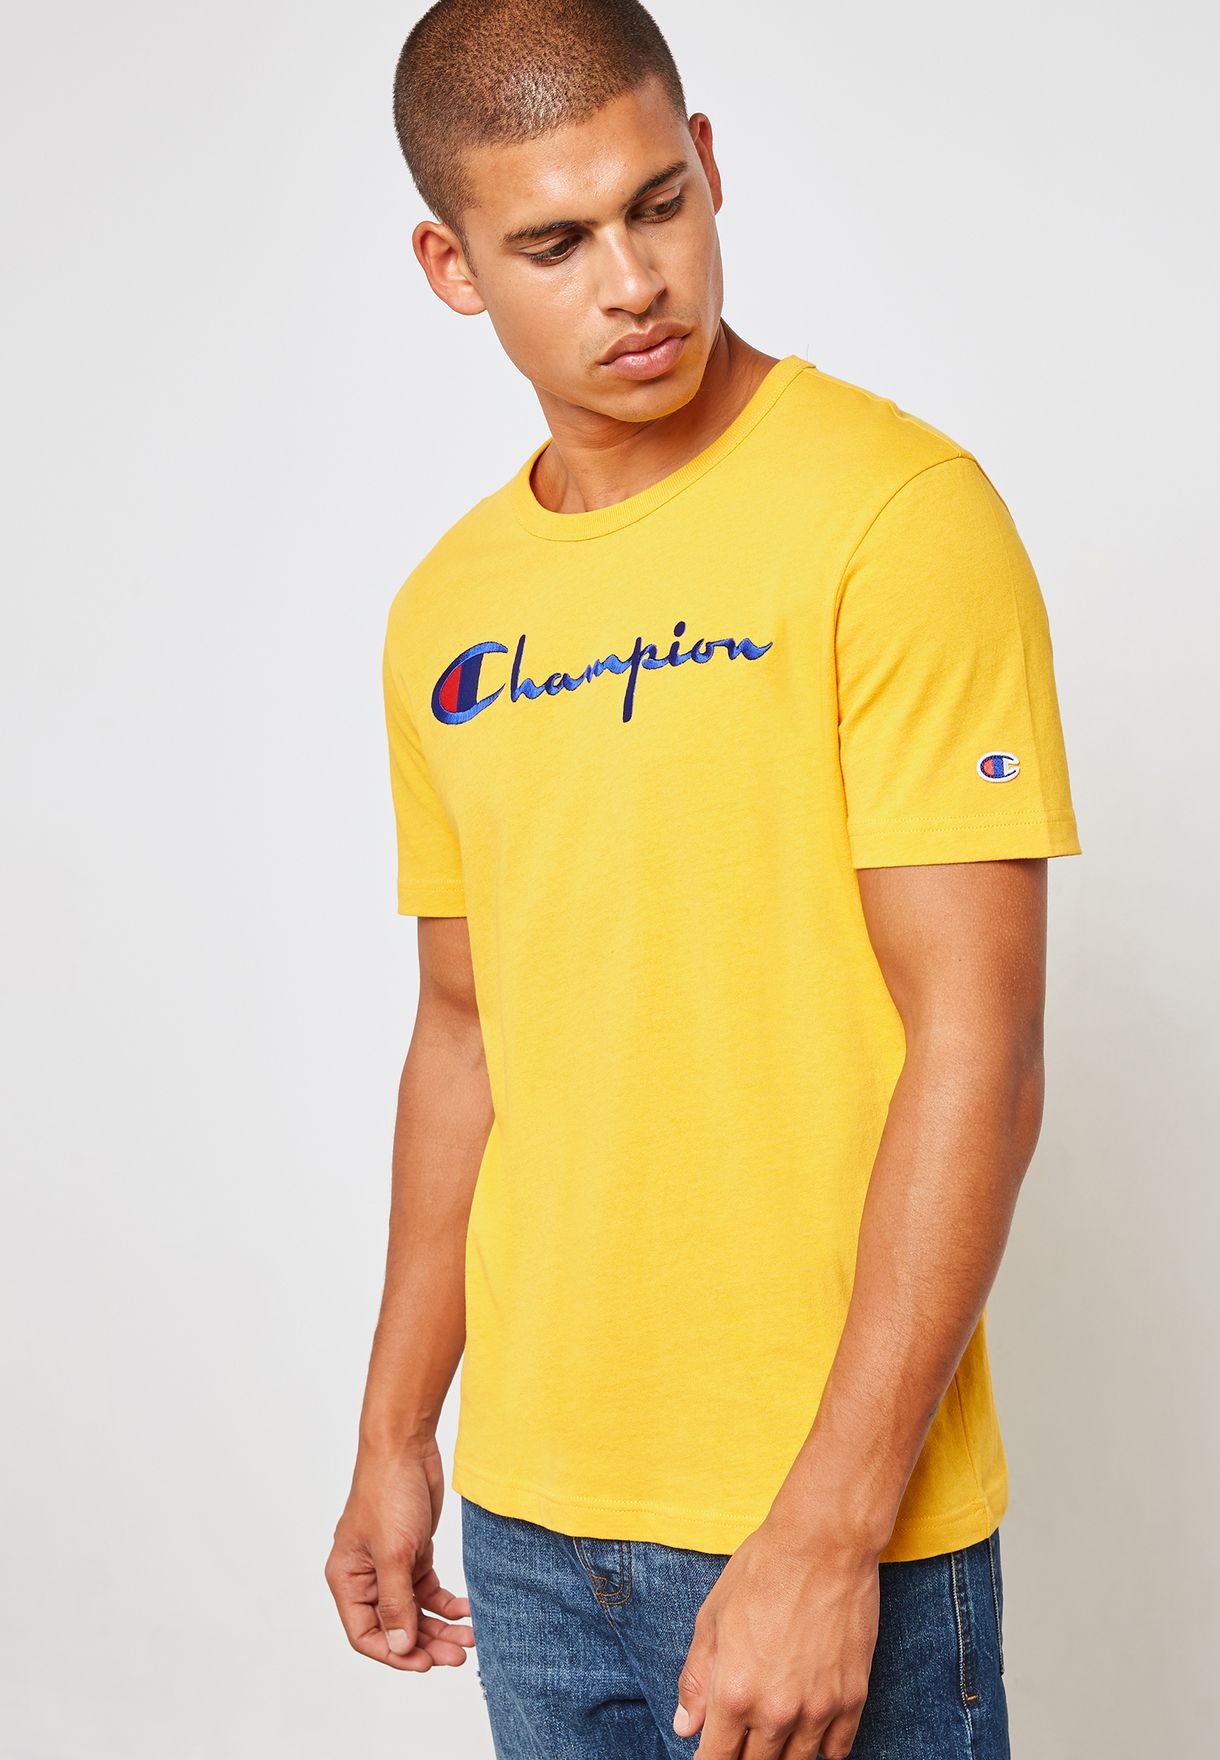 yellow champion shirt outfit